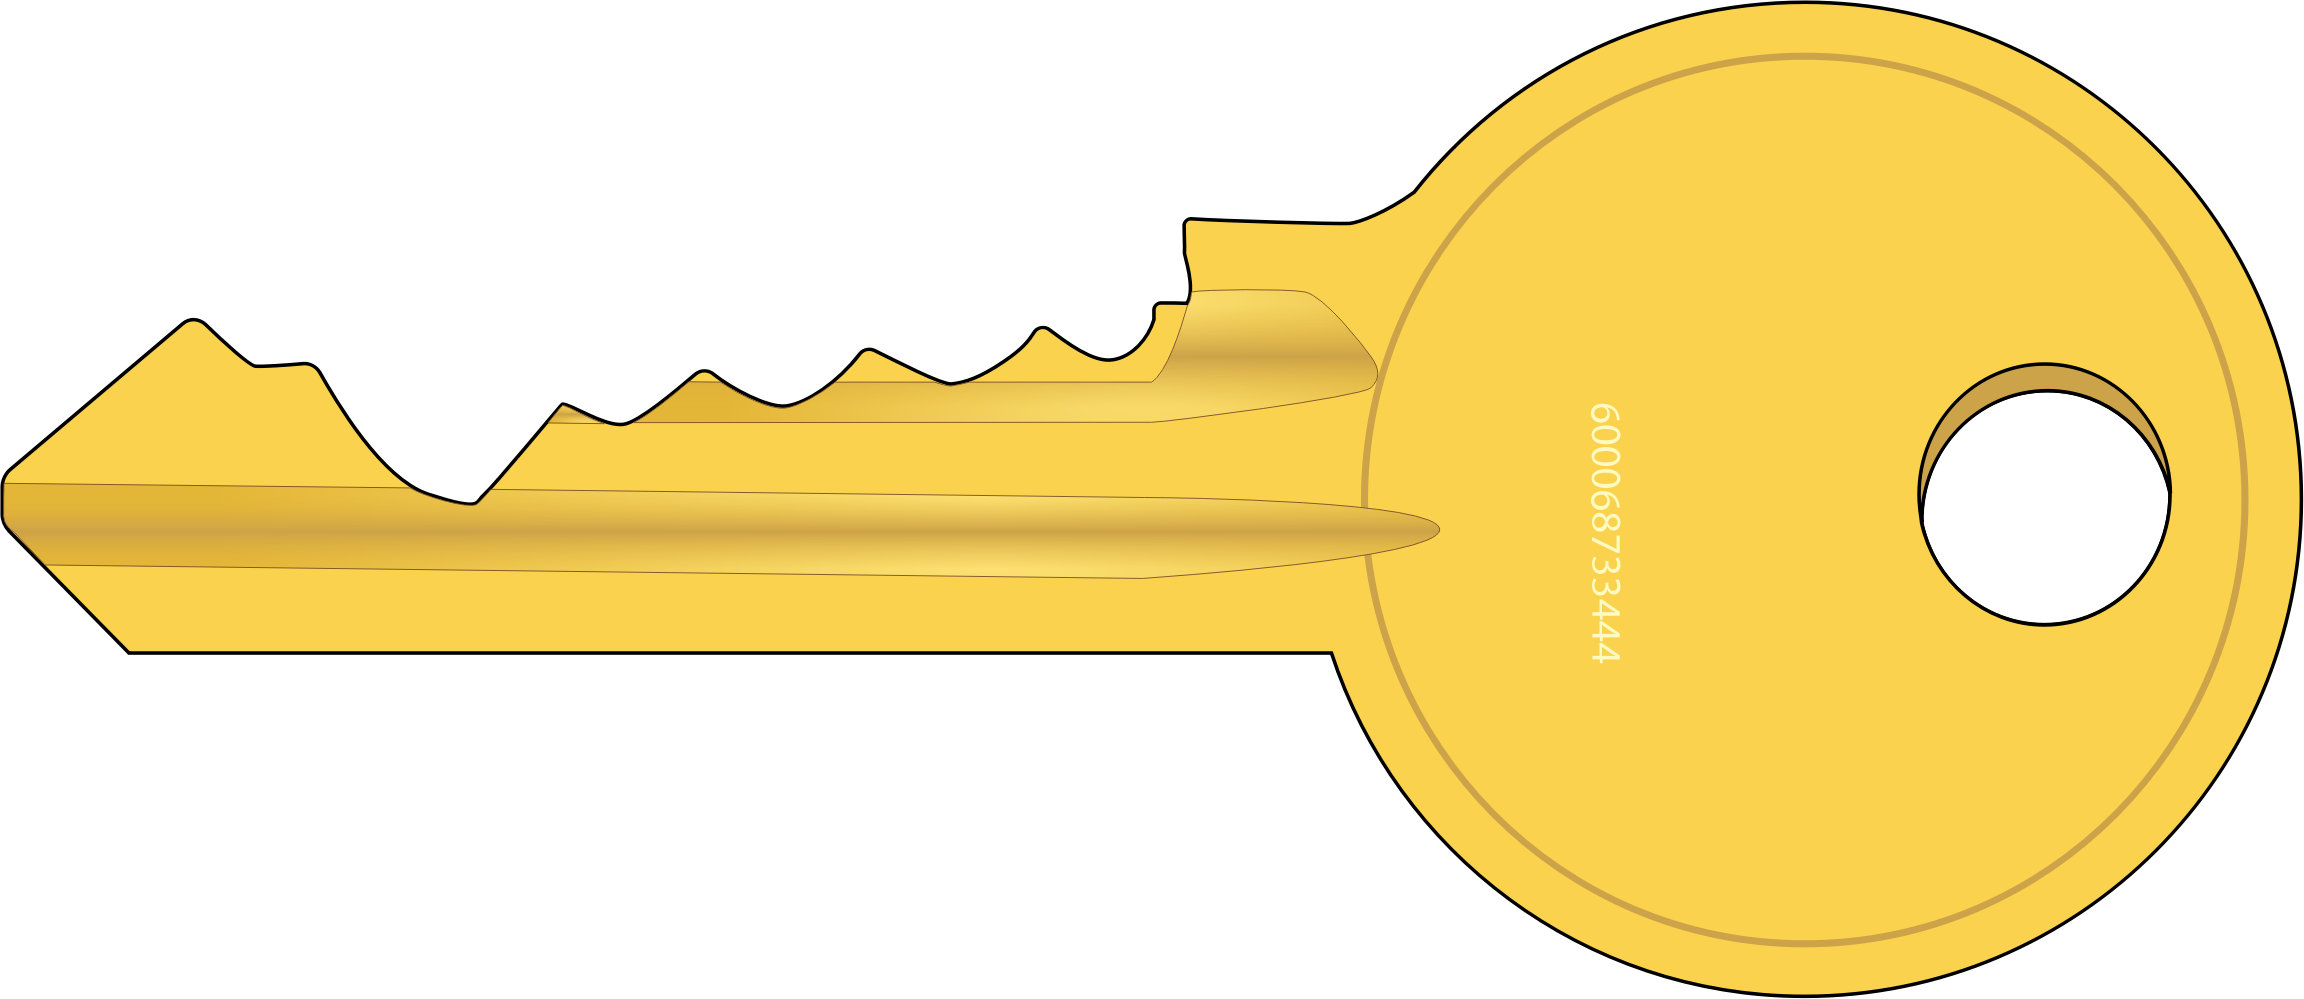 Key PNG - 6979